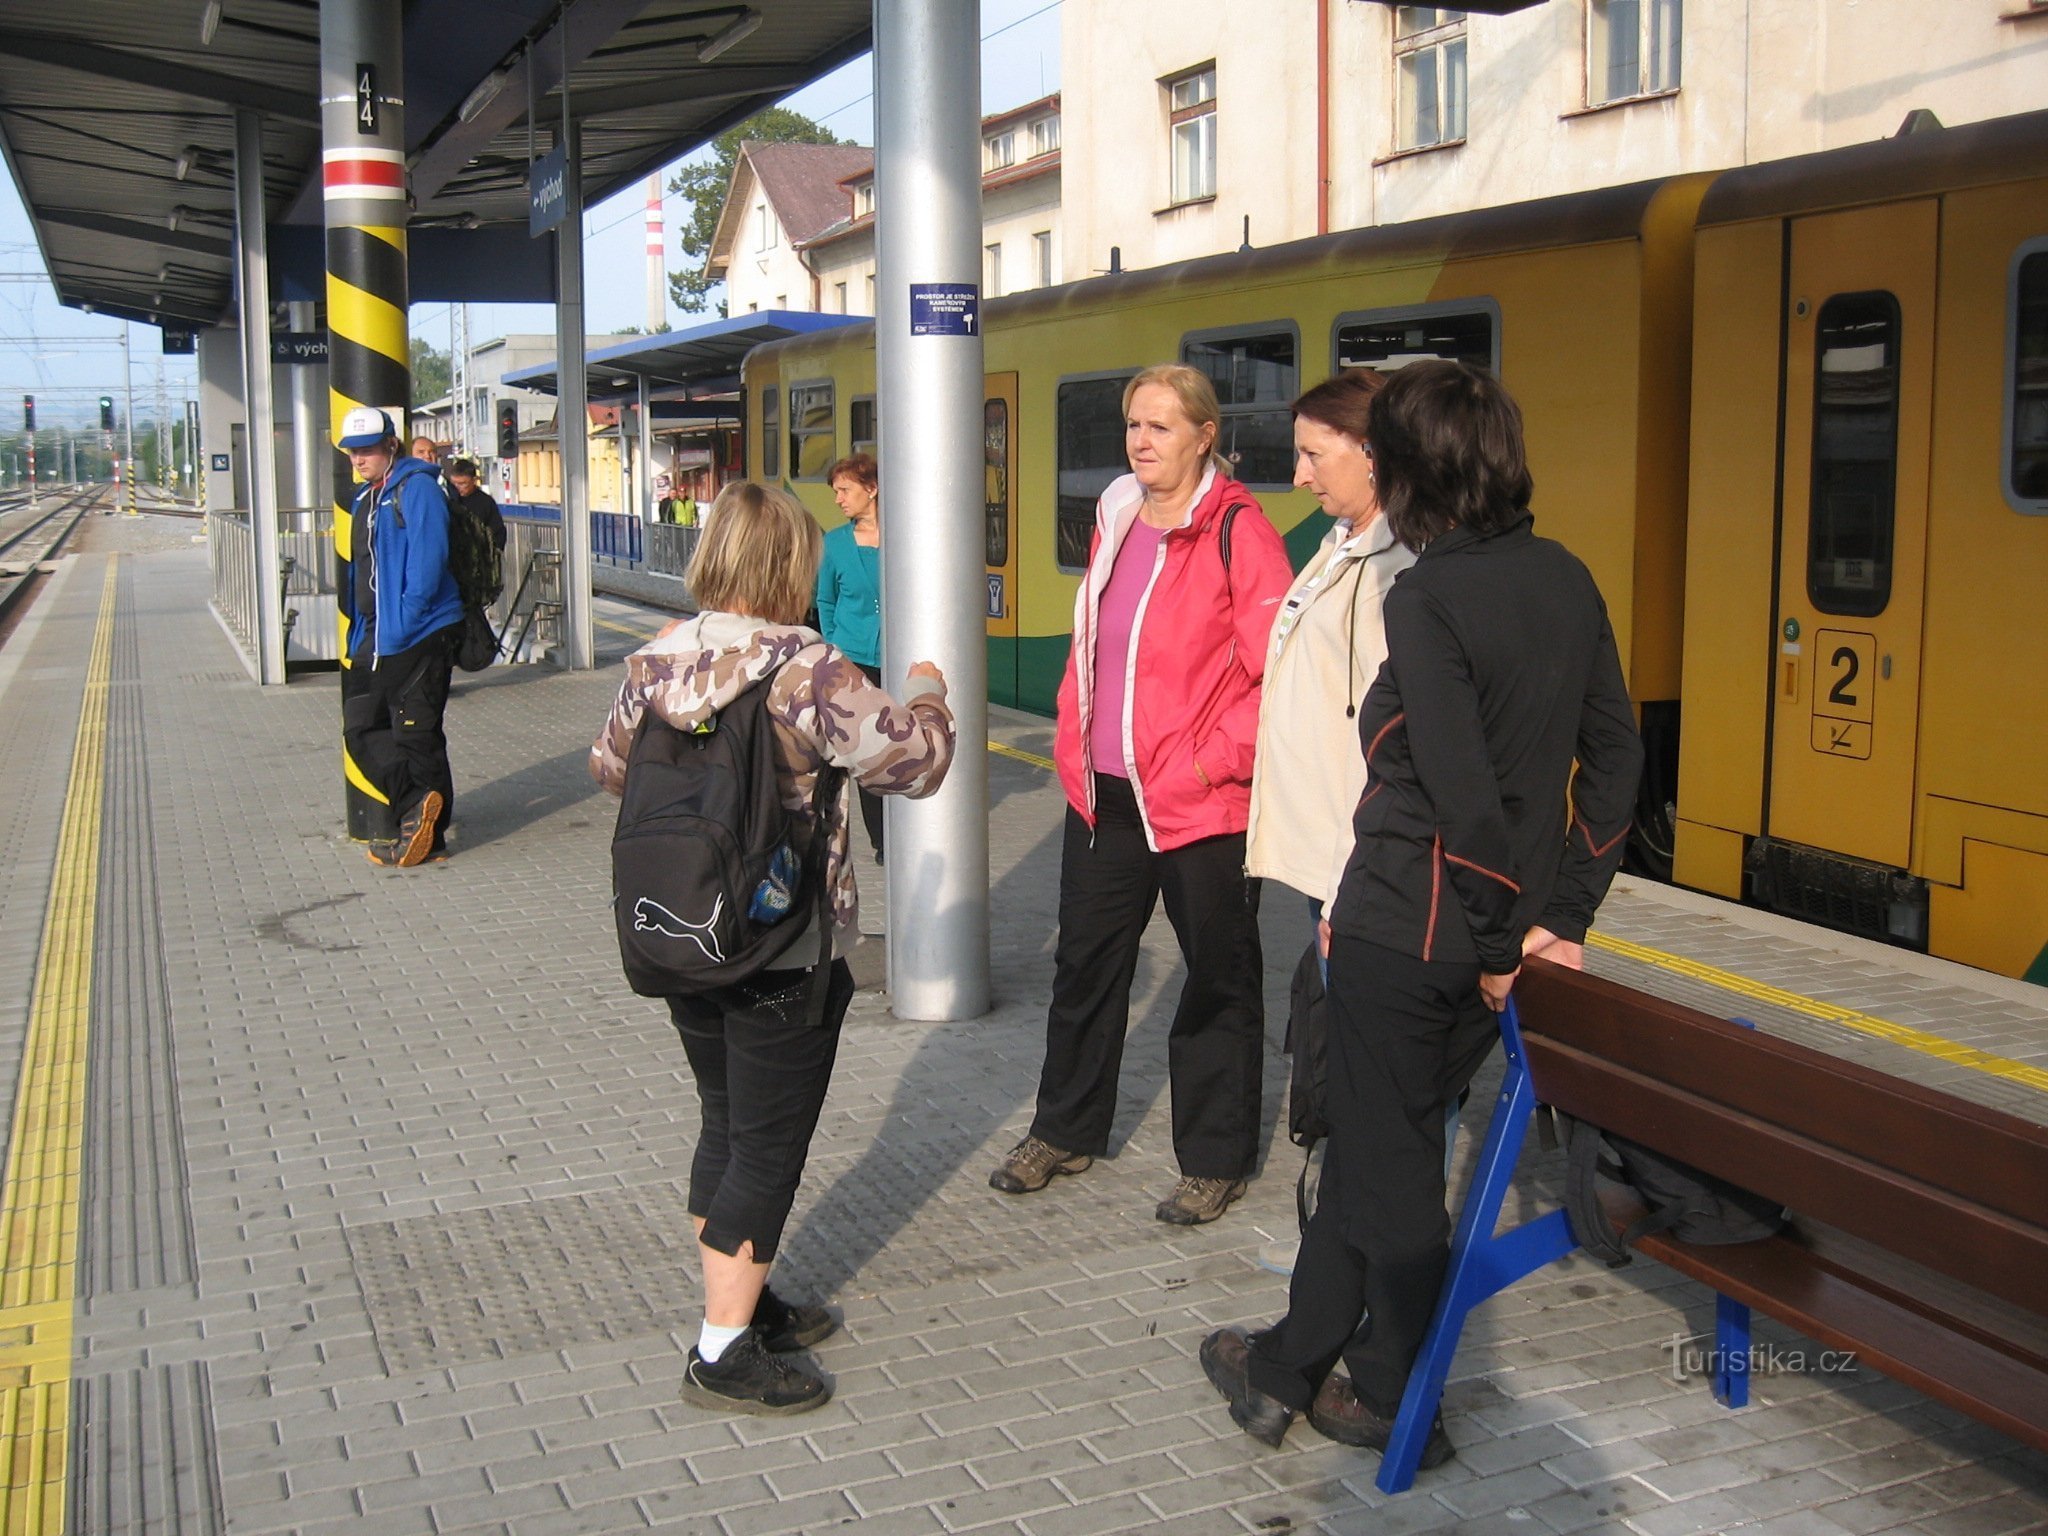 På Strakonice station